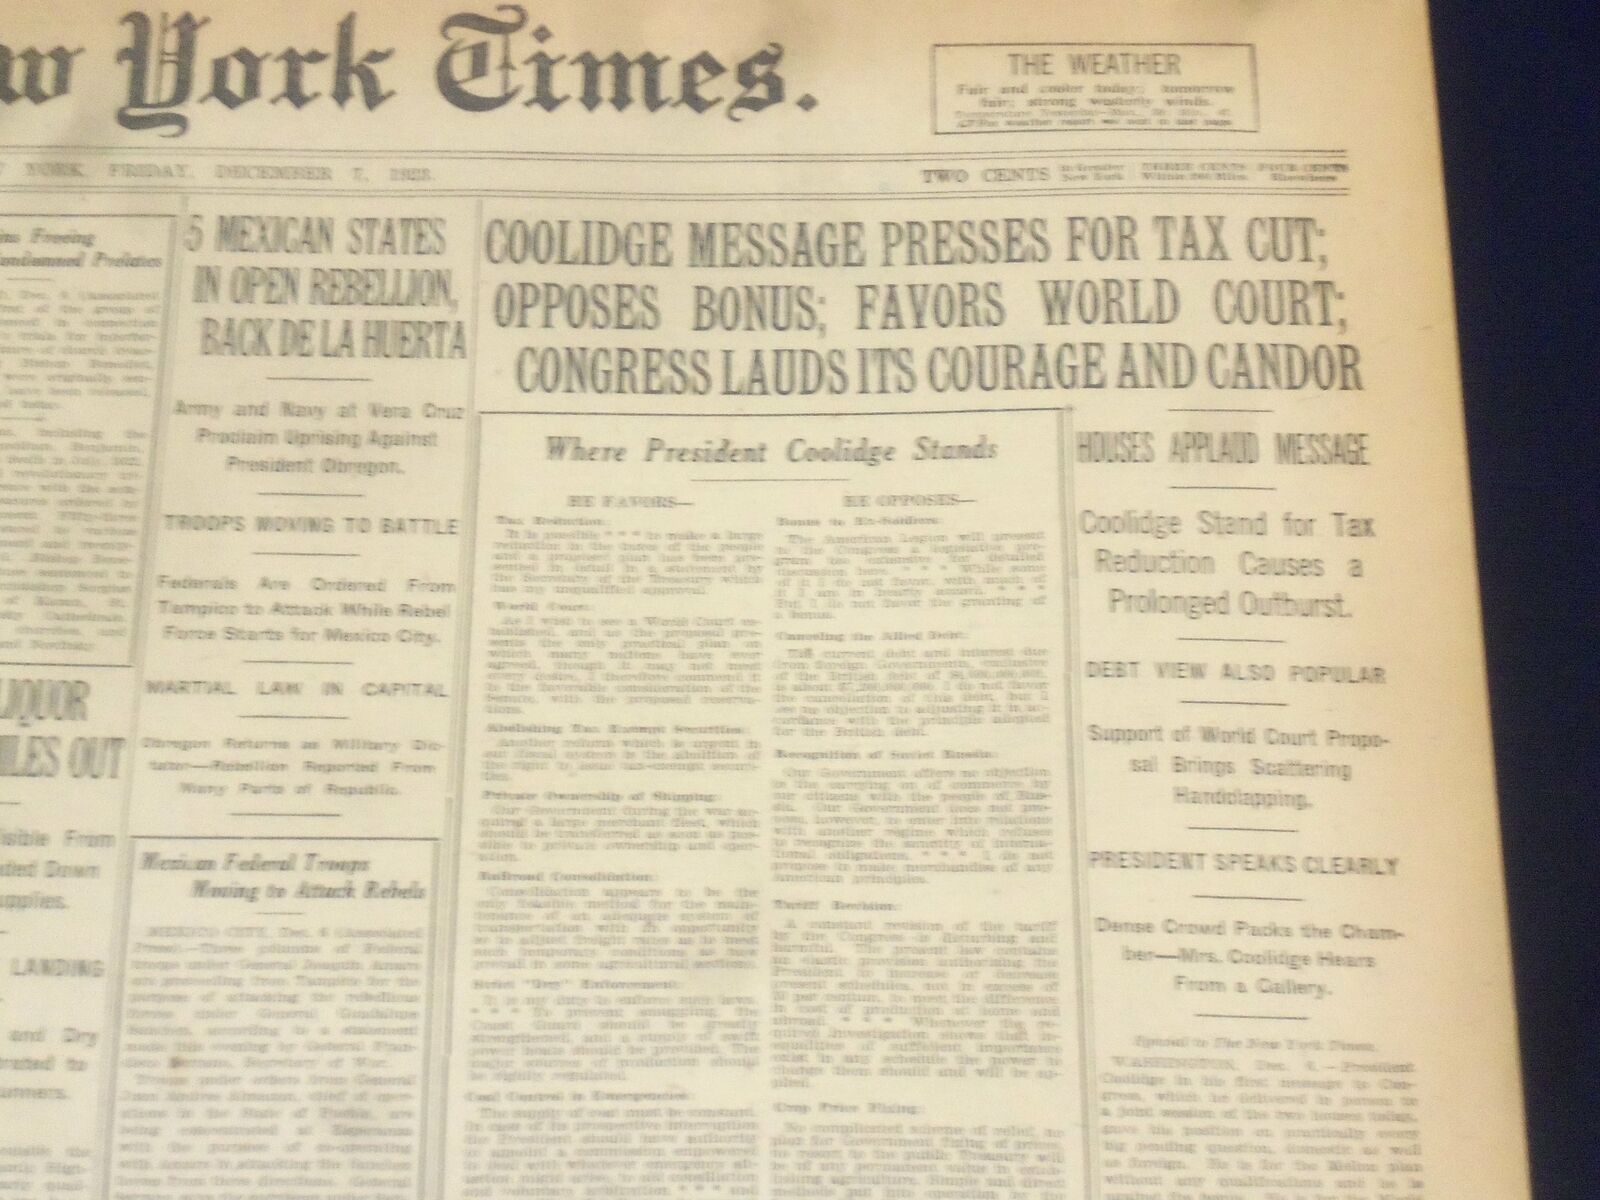 1923 DECEMBER 7 NEW YORK TIMES - COOLIDGE MESSAGE PRESSES TAX CUT - NT 9215